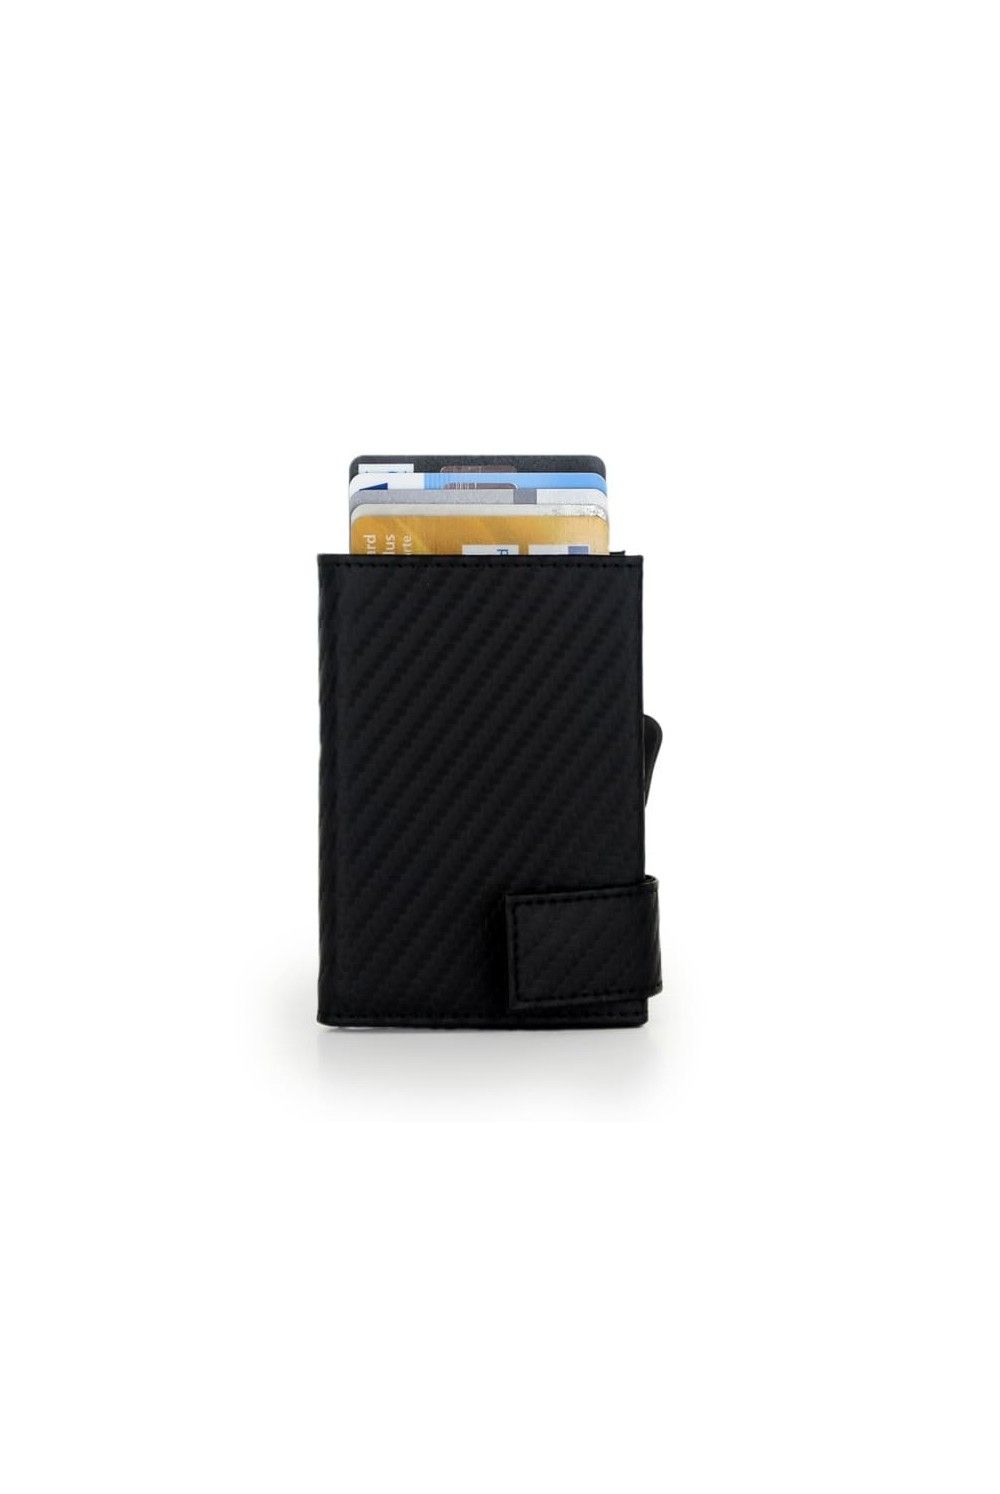 SecWal Card Case DK Leather Carbon Black